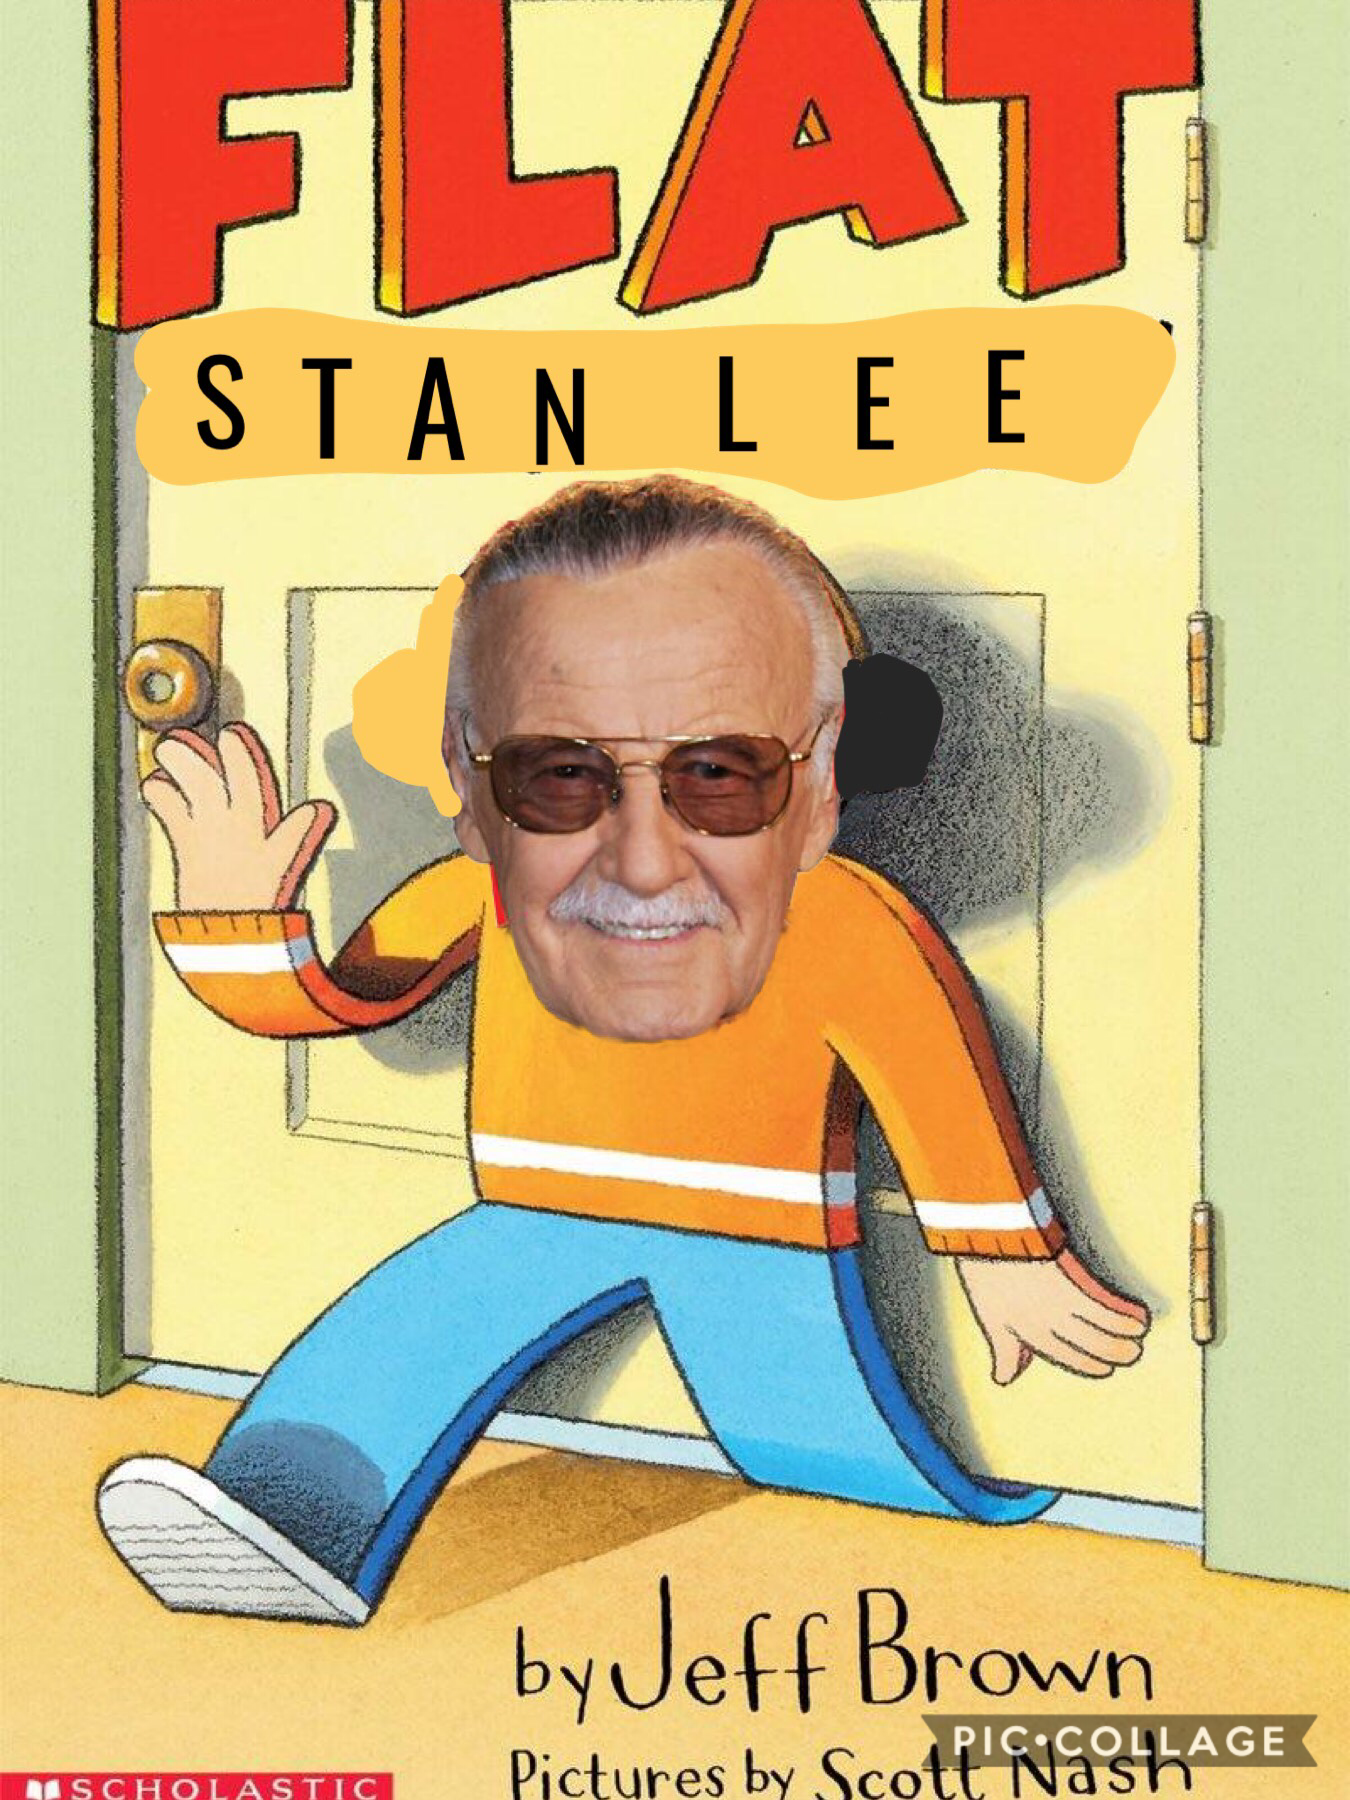 I honor of Stan Lee